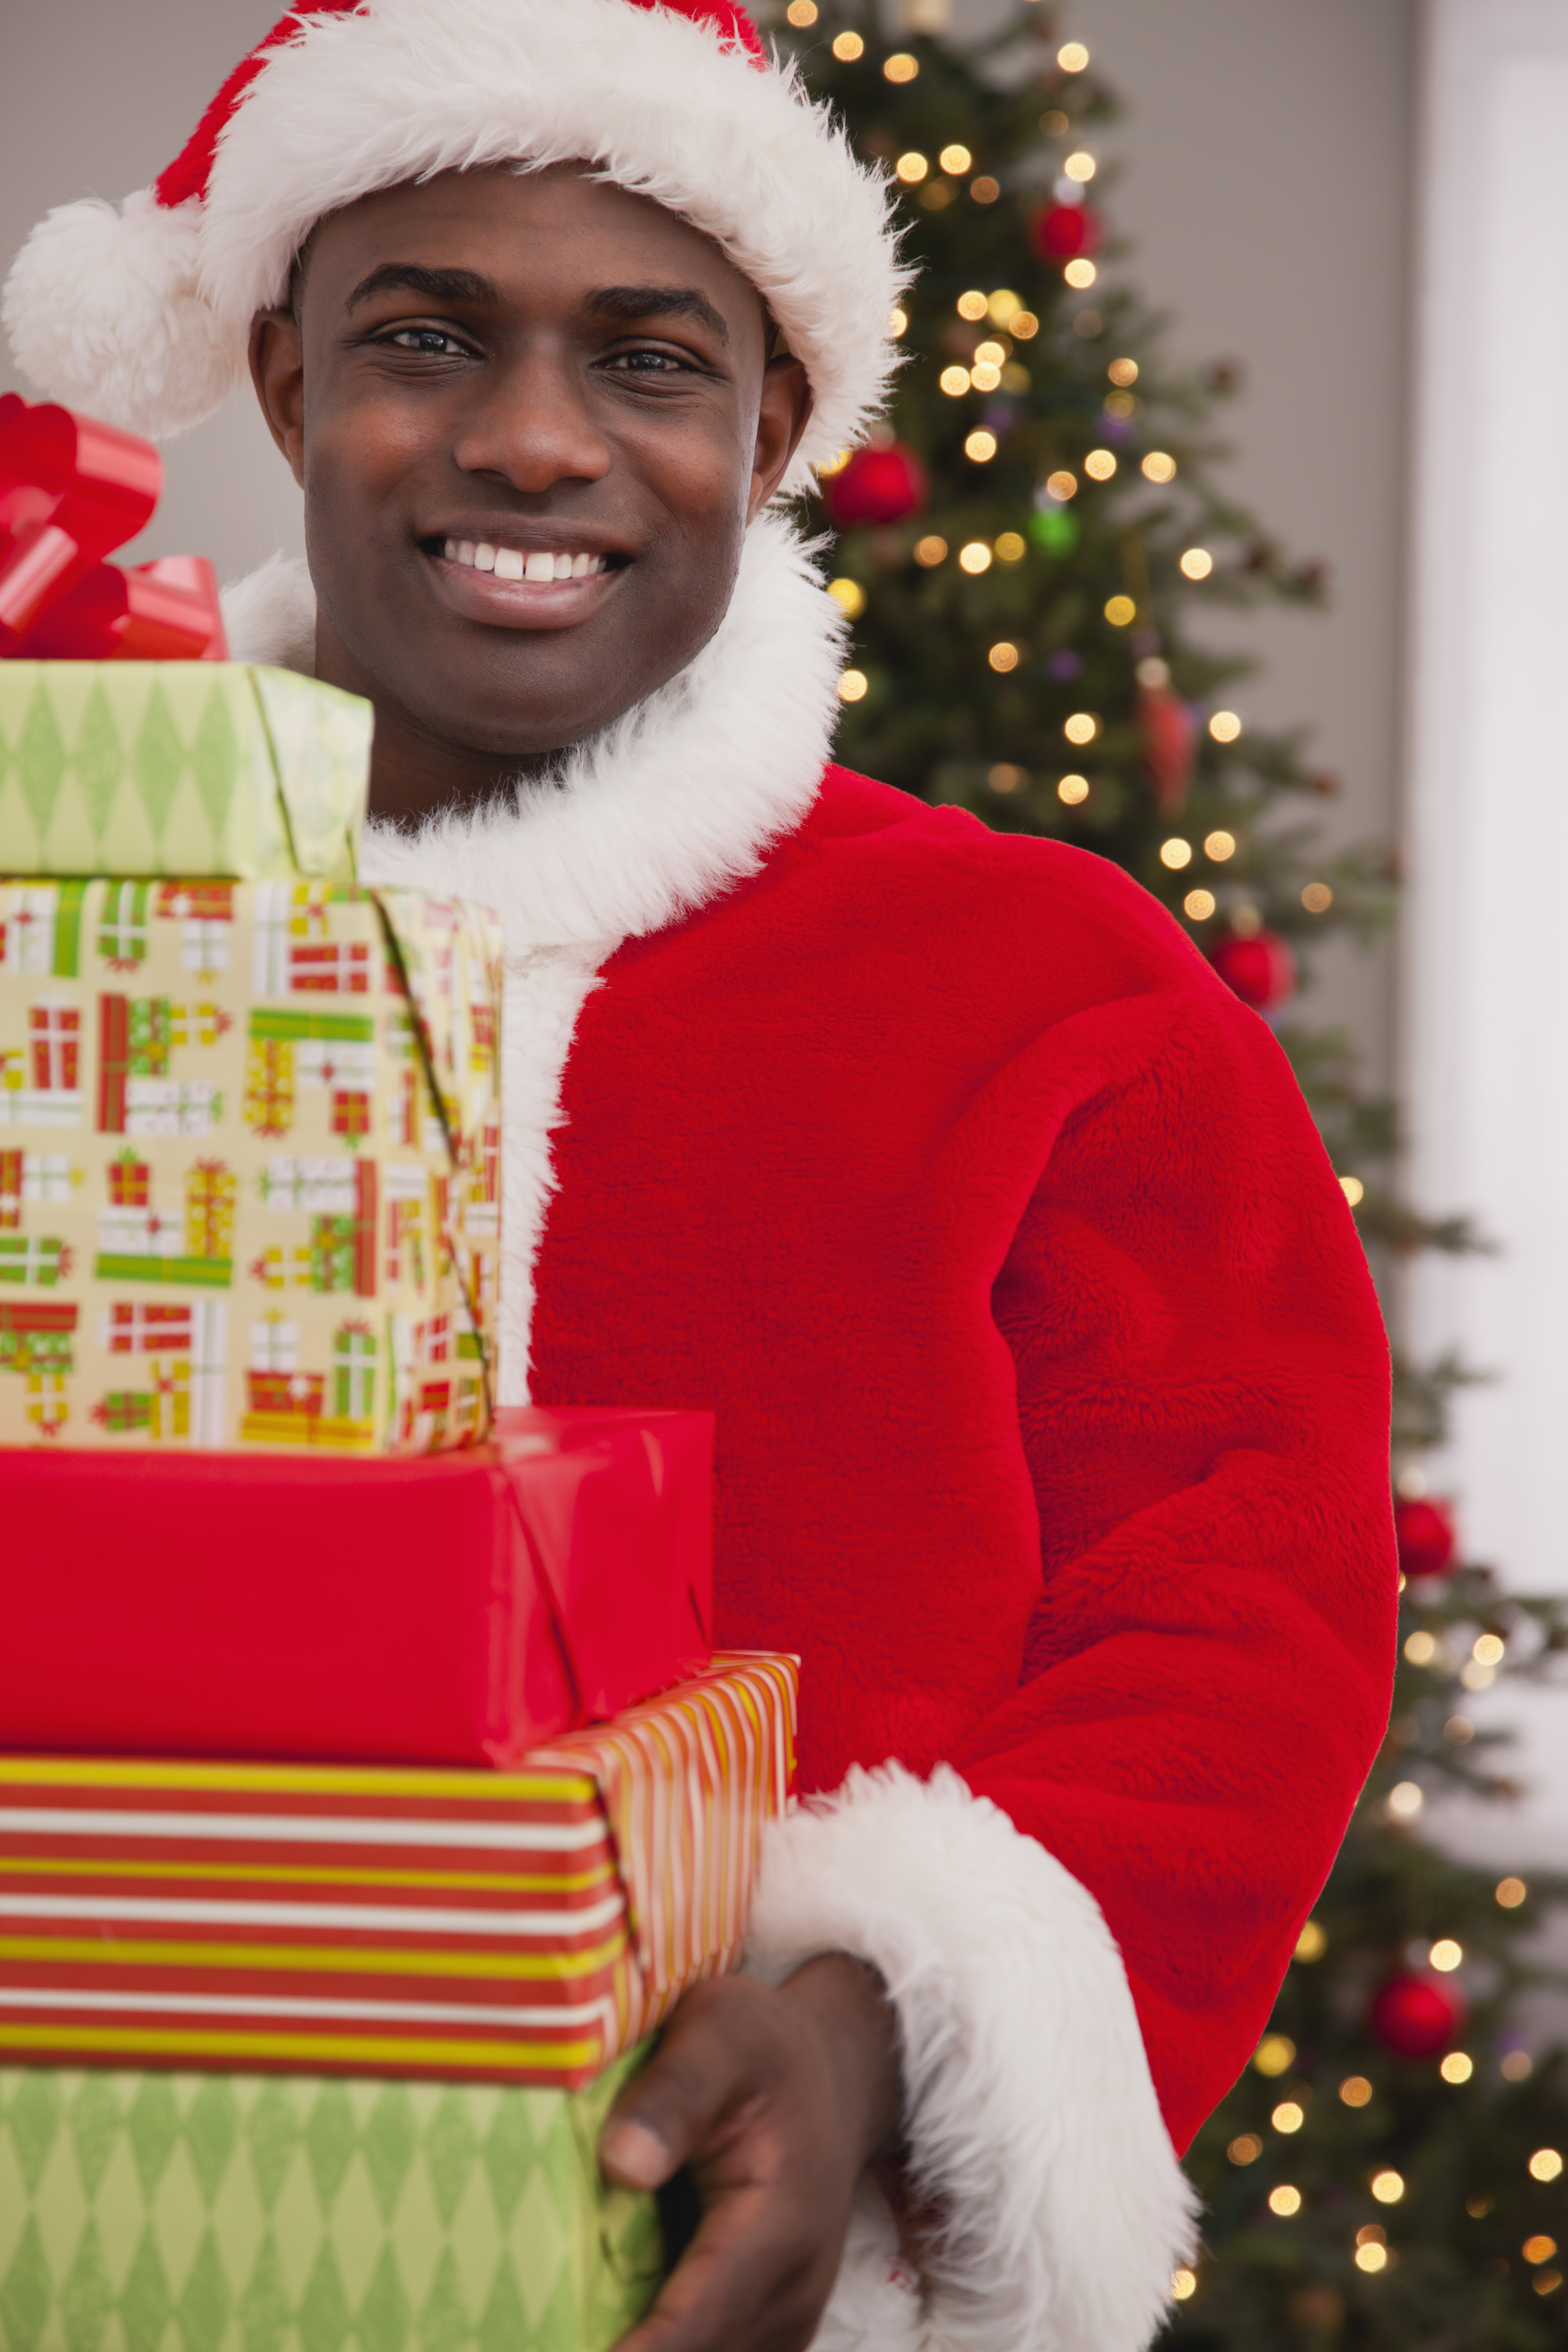 USA, Illinois, Metamora, Santa Claus with stack of gifts